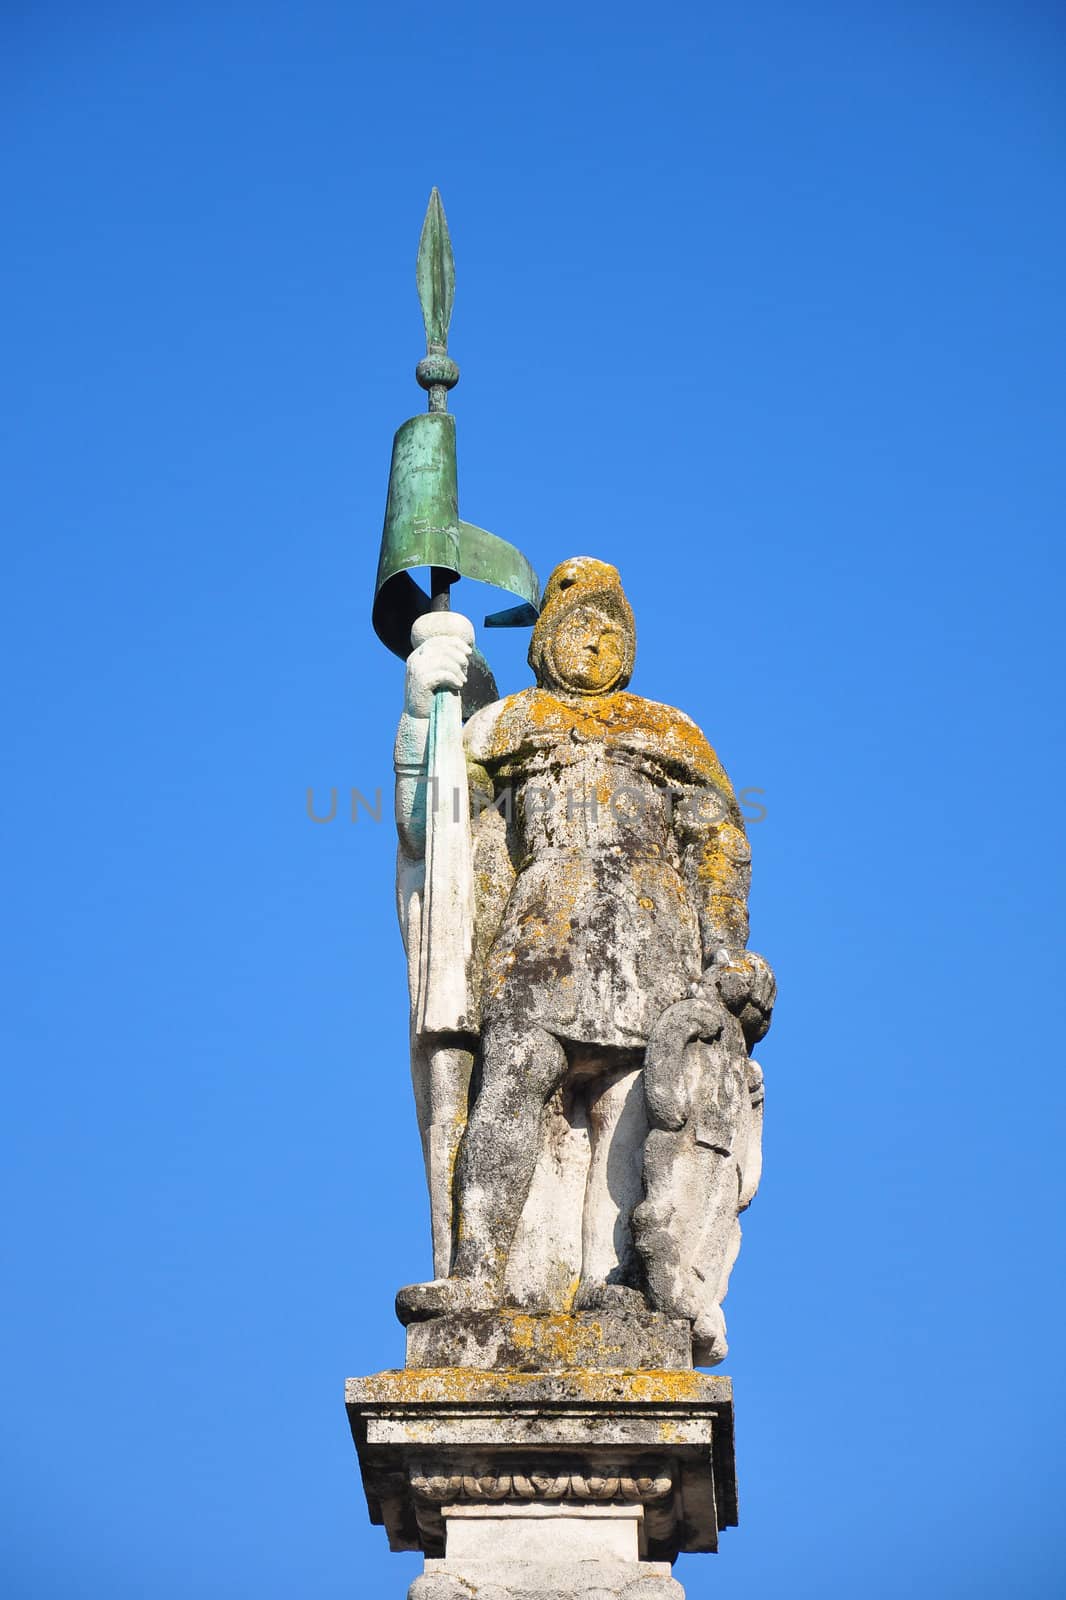 Statue Saint Jacob in Straubing, Bavaria by rbiedermann